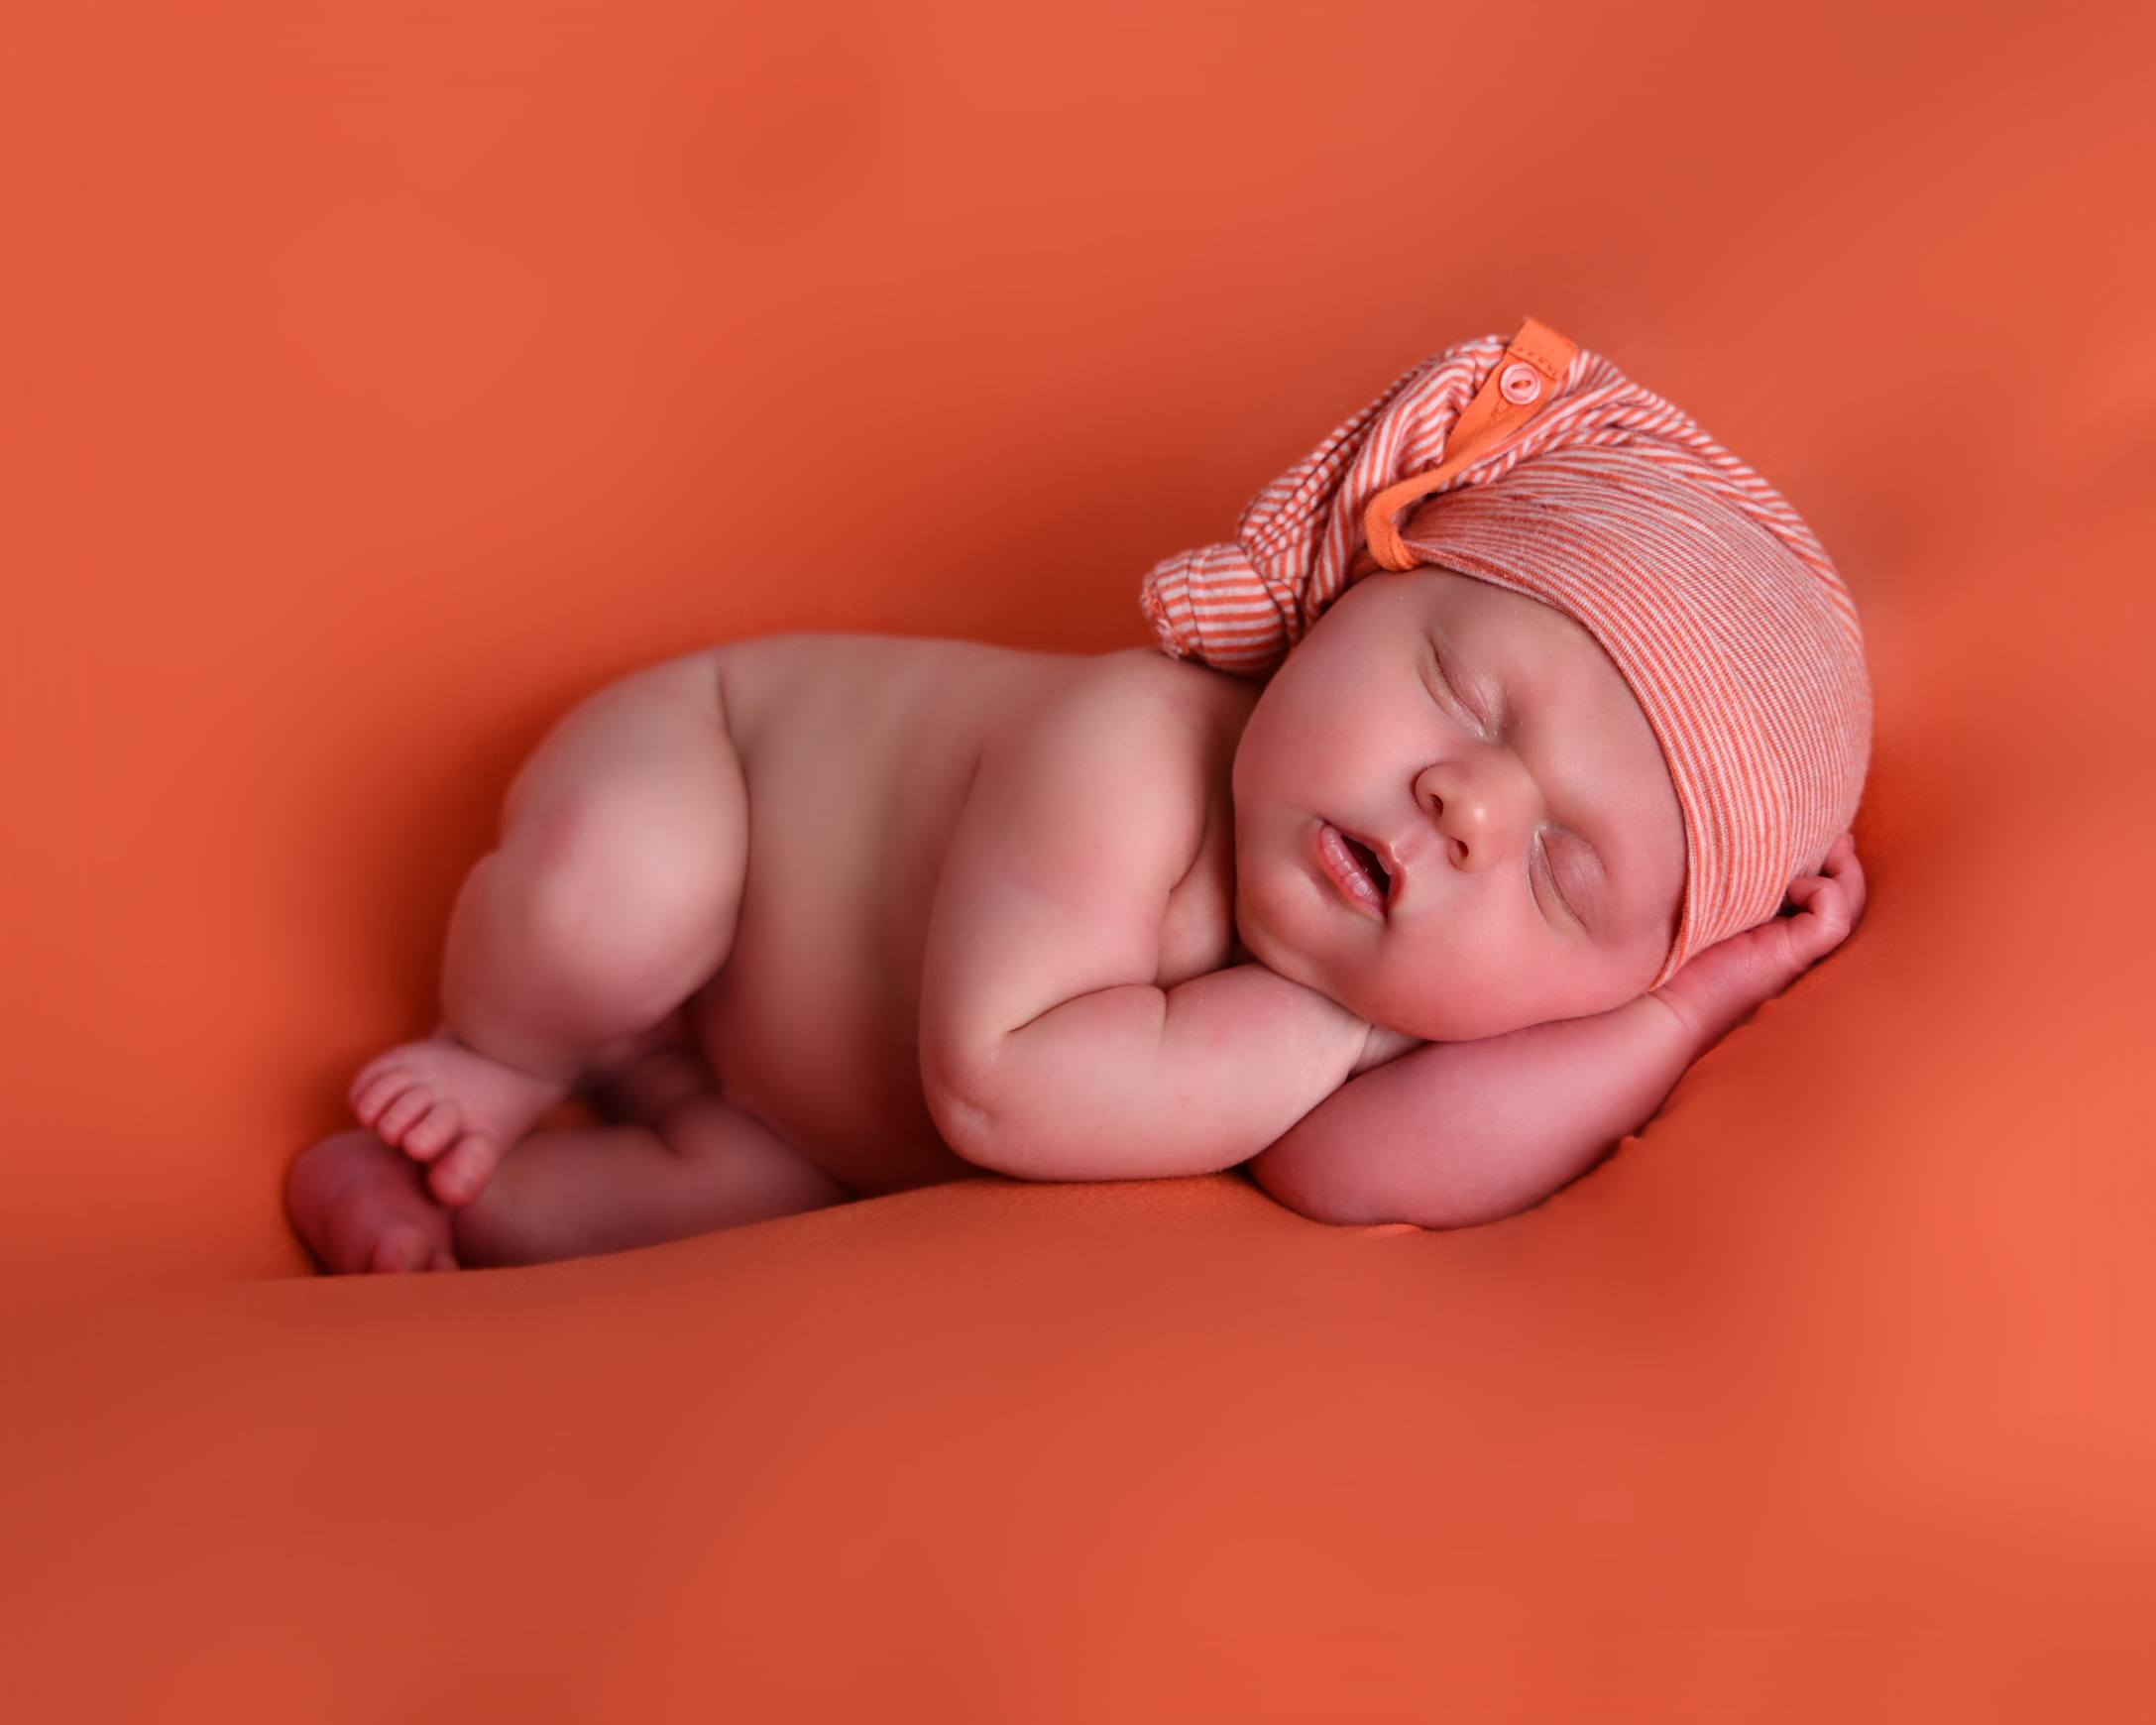 New Hampshire Newborn Photography 1 - Portfolio: Infant Photography